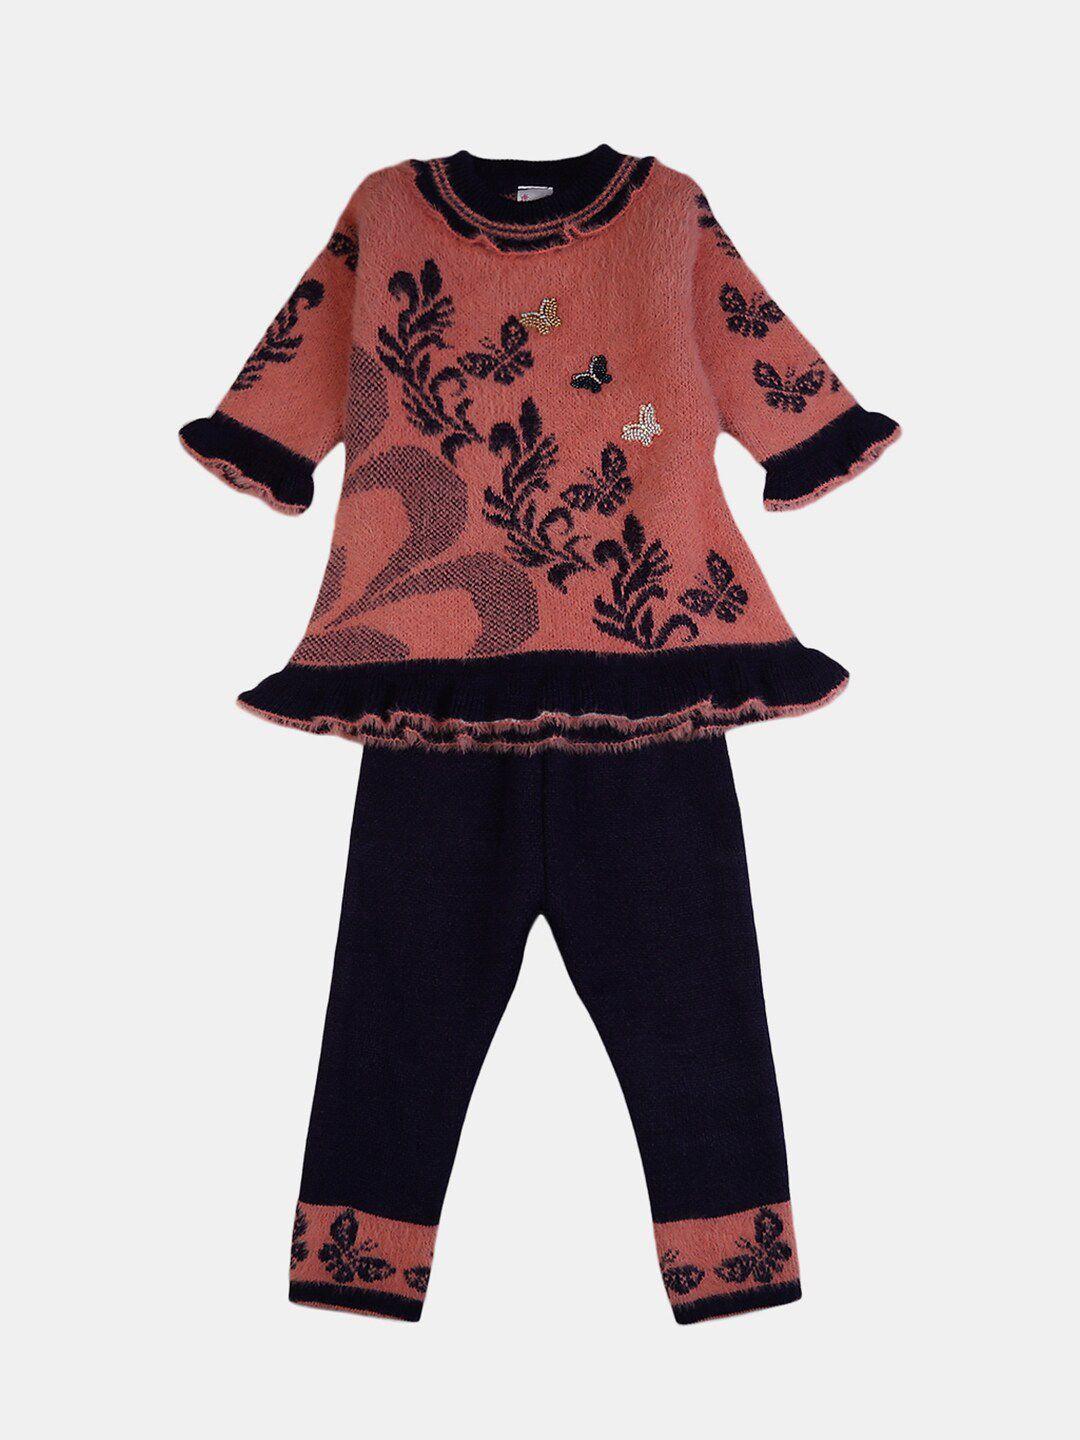 v-mart-girls-brown-&-black-printed-pure-cotton-top-with-pyjamas